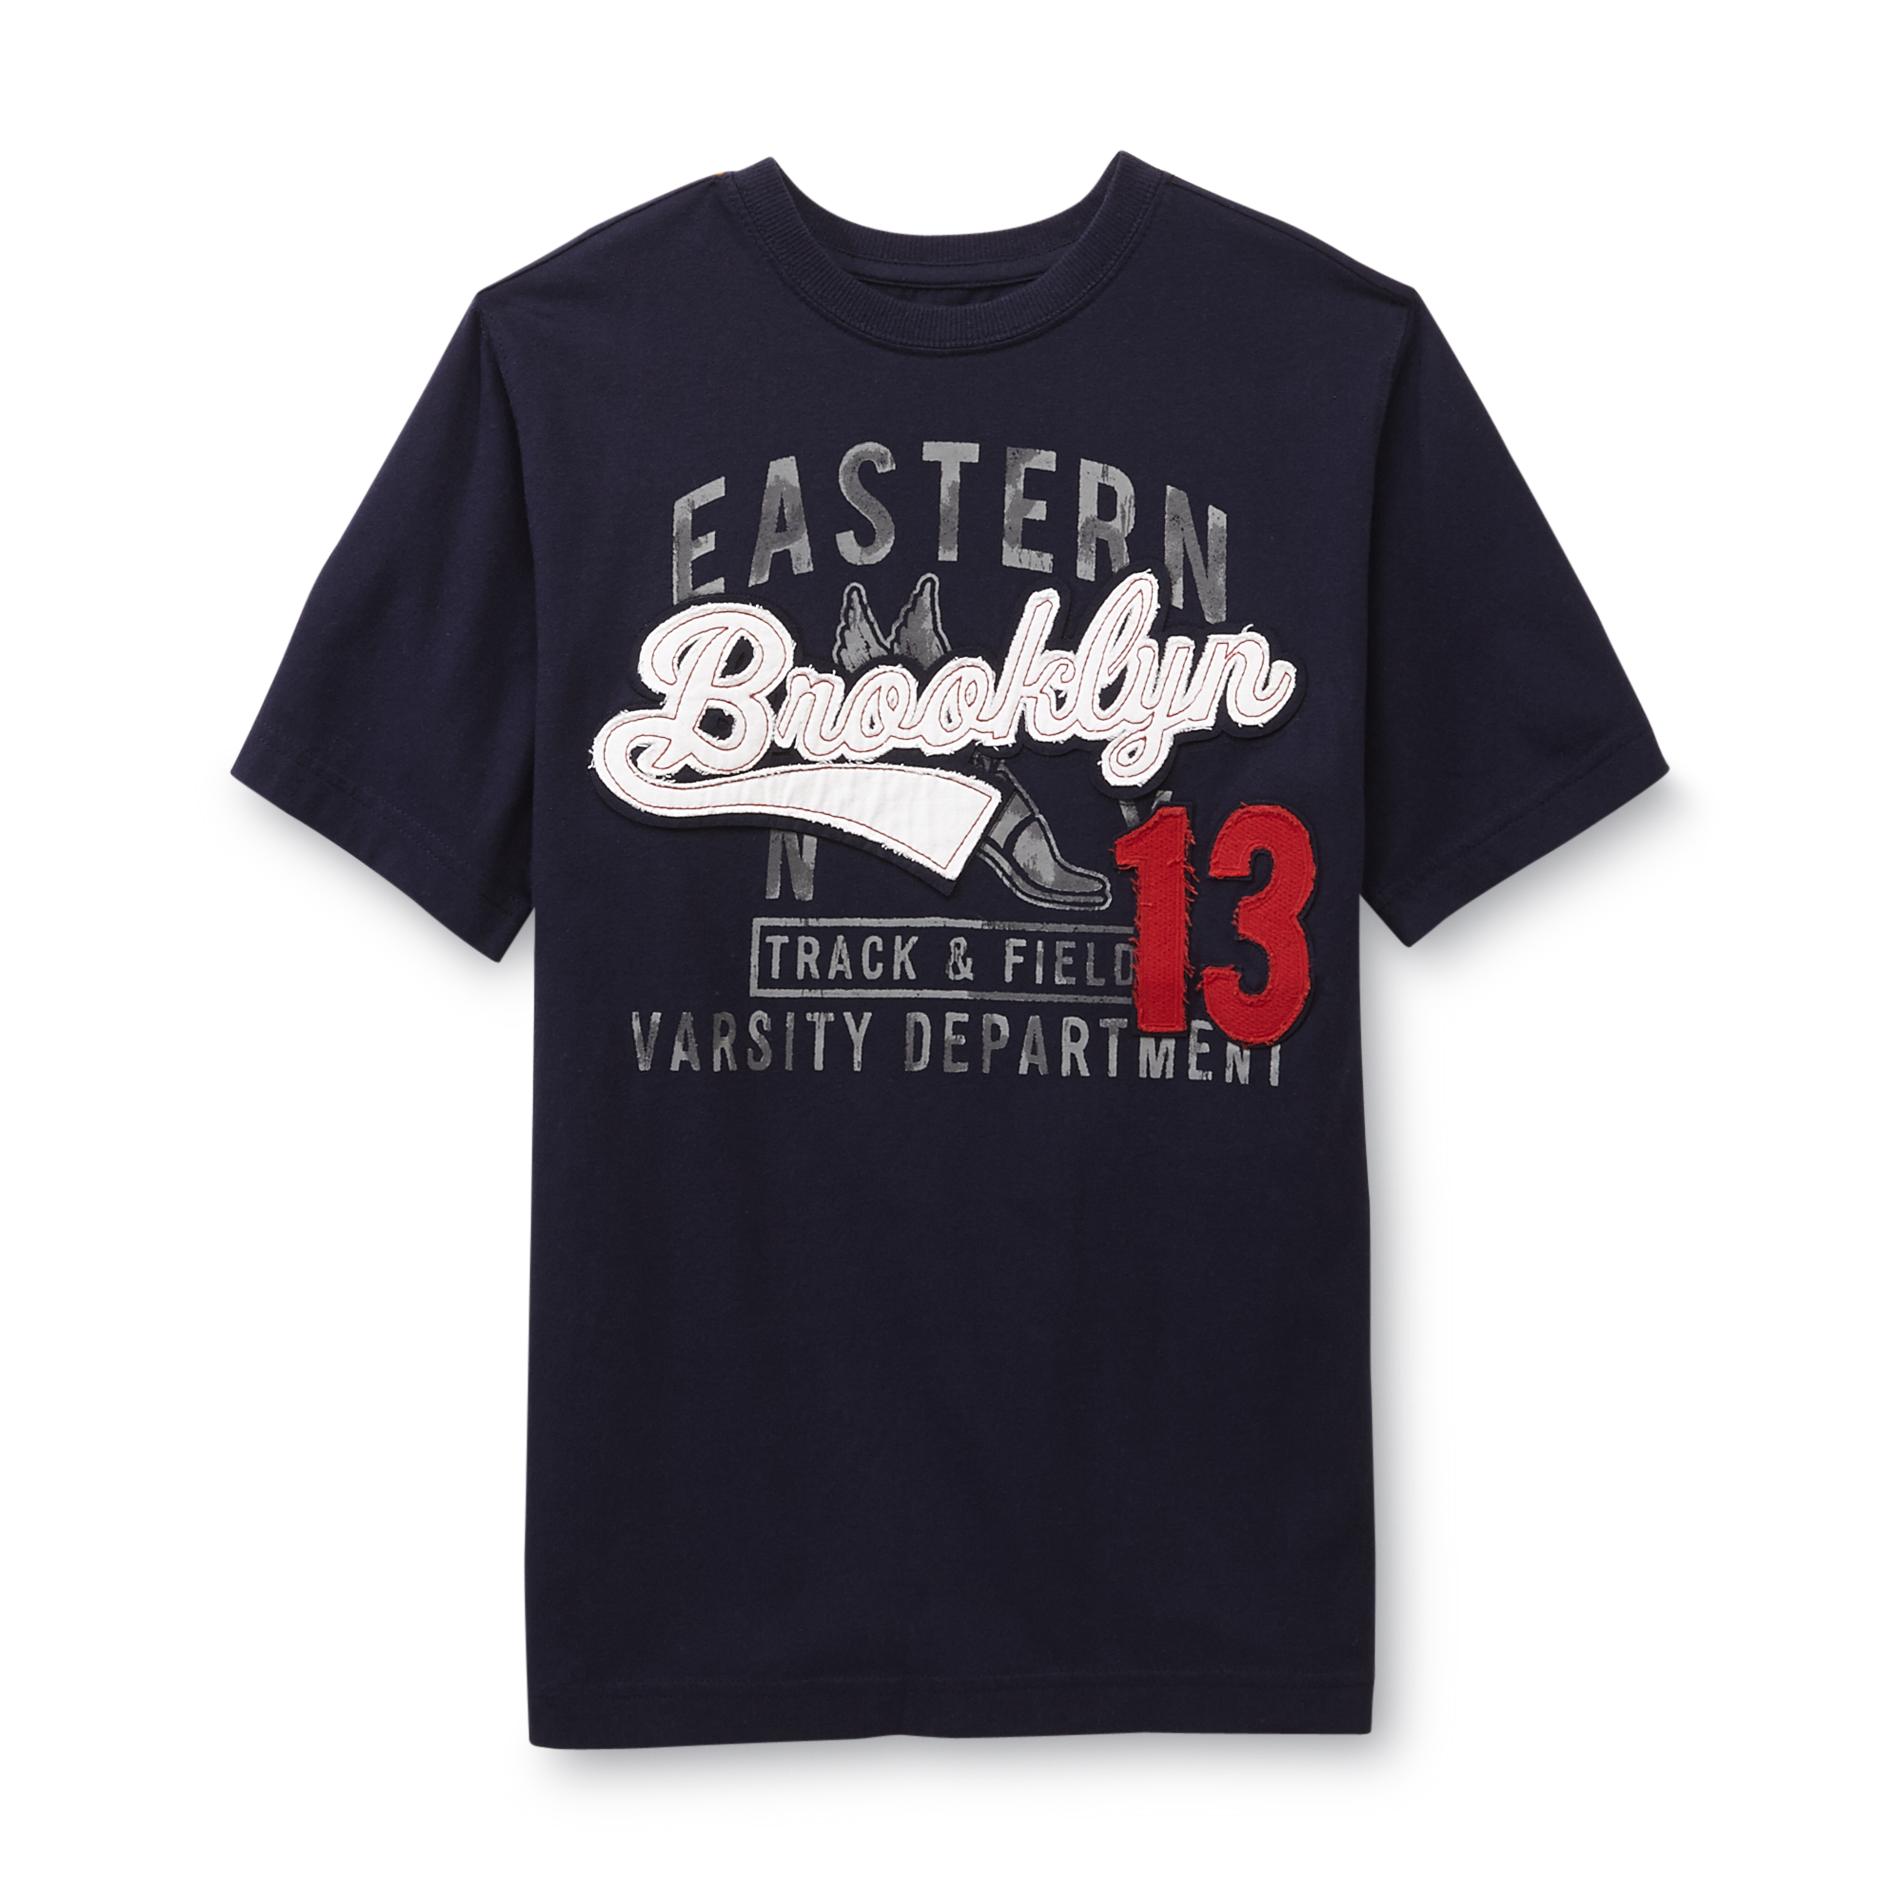 Canyon River Blues Boy's Applique T-Shirt - Brooklyn 13